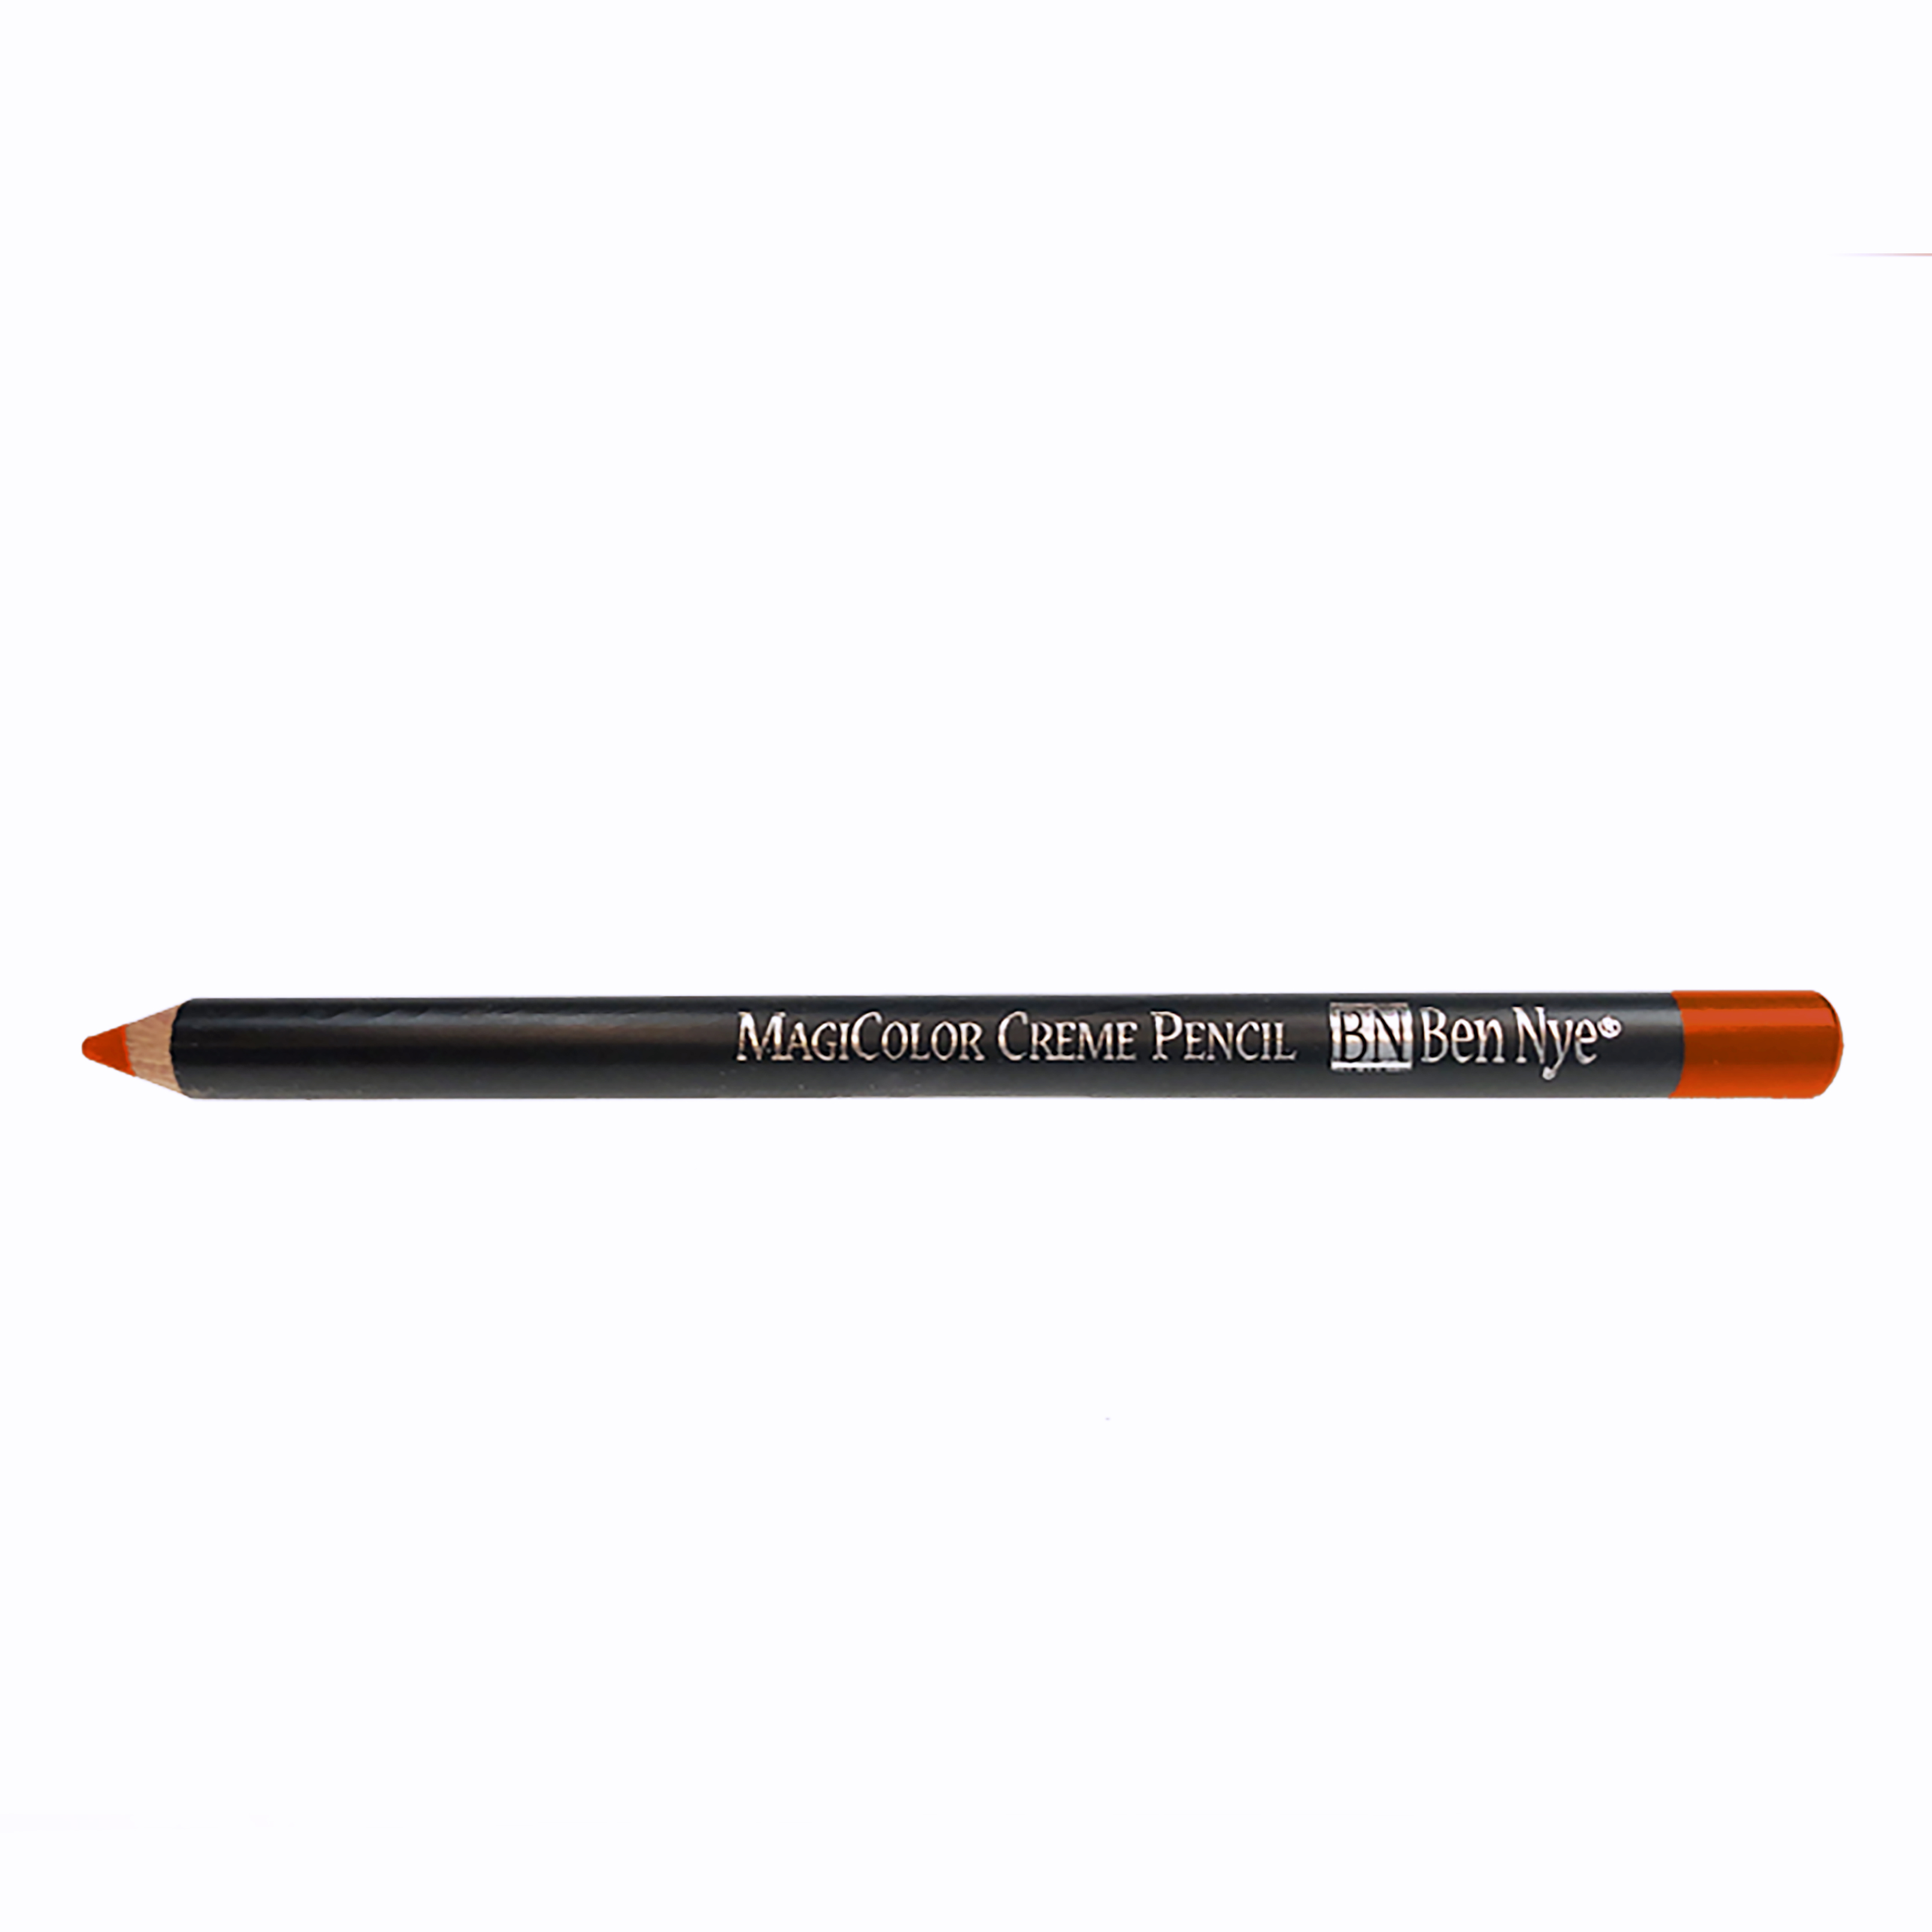 Magicolor Creme Pencils - Bright orange